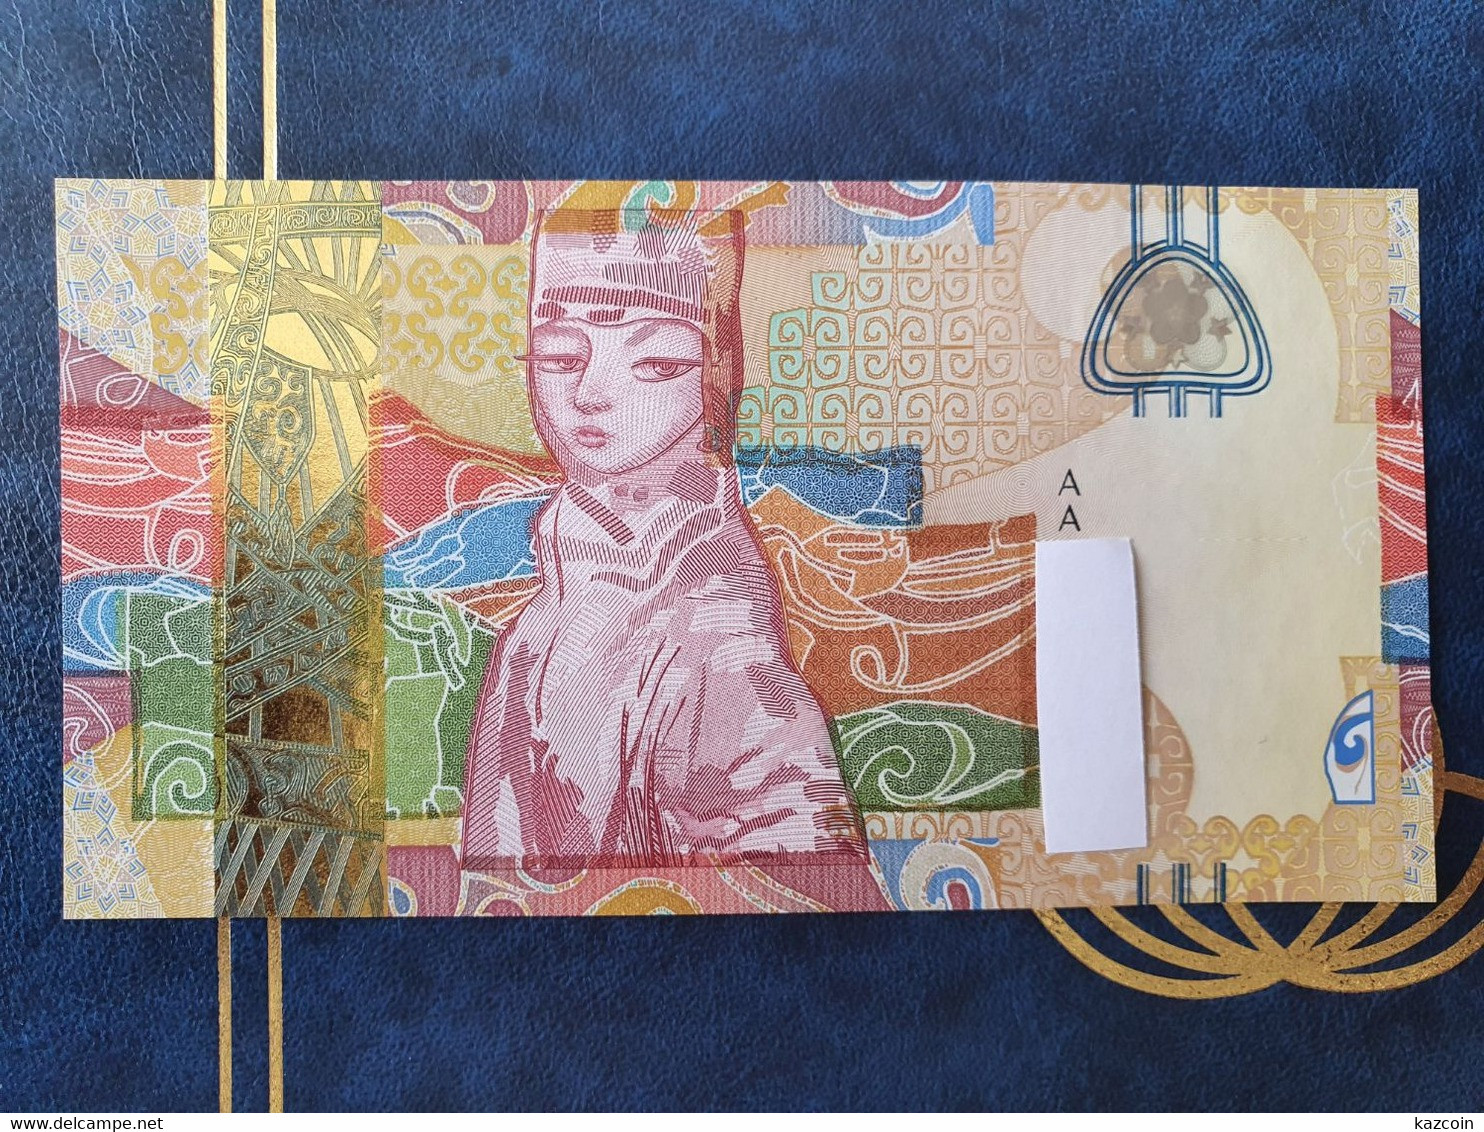 2017 Kazakhstan Kasachstan - Test Banknotes ARU (BEAUTY GIRL) - VERY RARE!!!! - UNC - 11 DIFFERENT TYPES - Kazakhstan